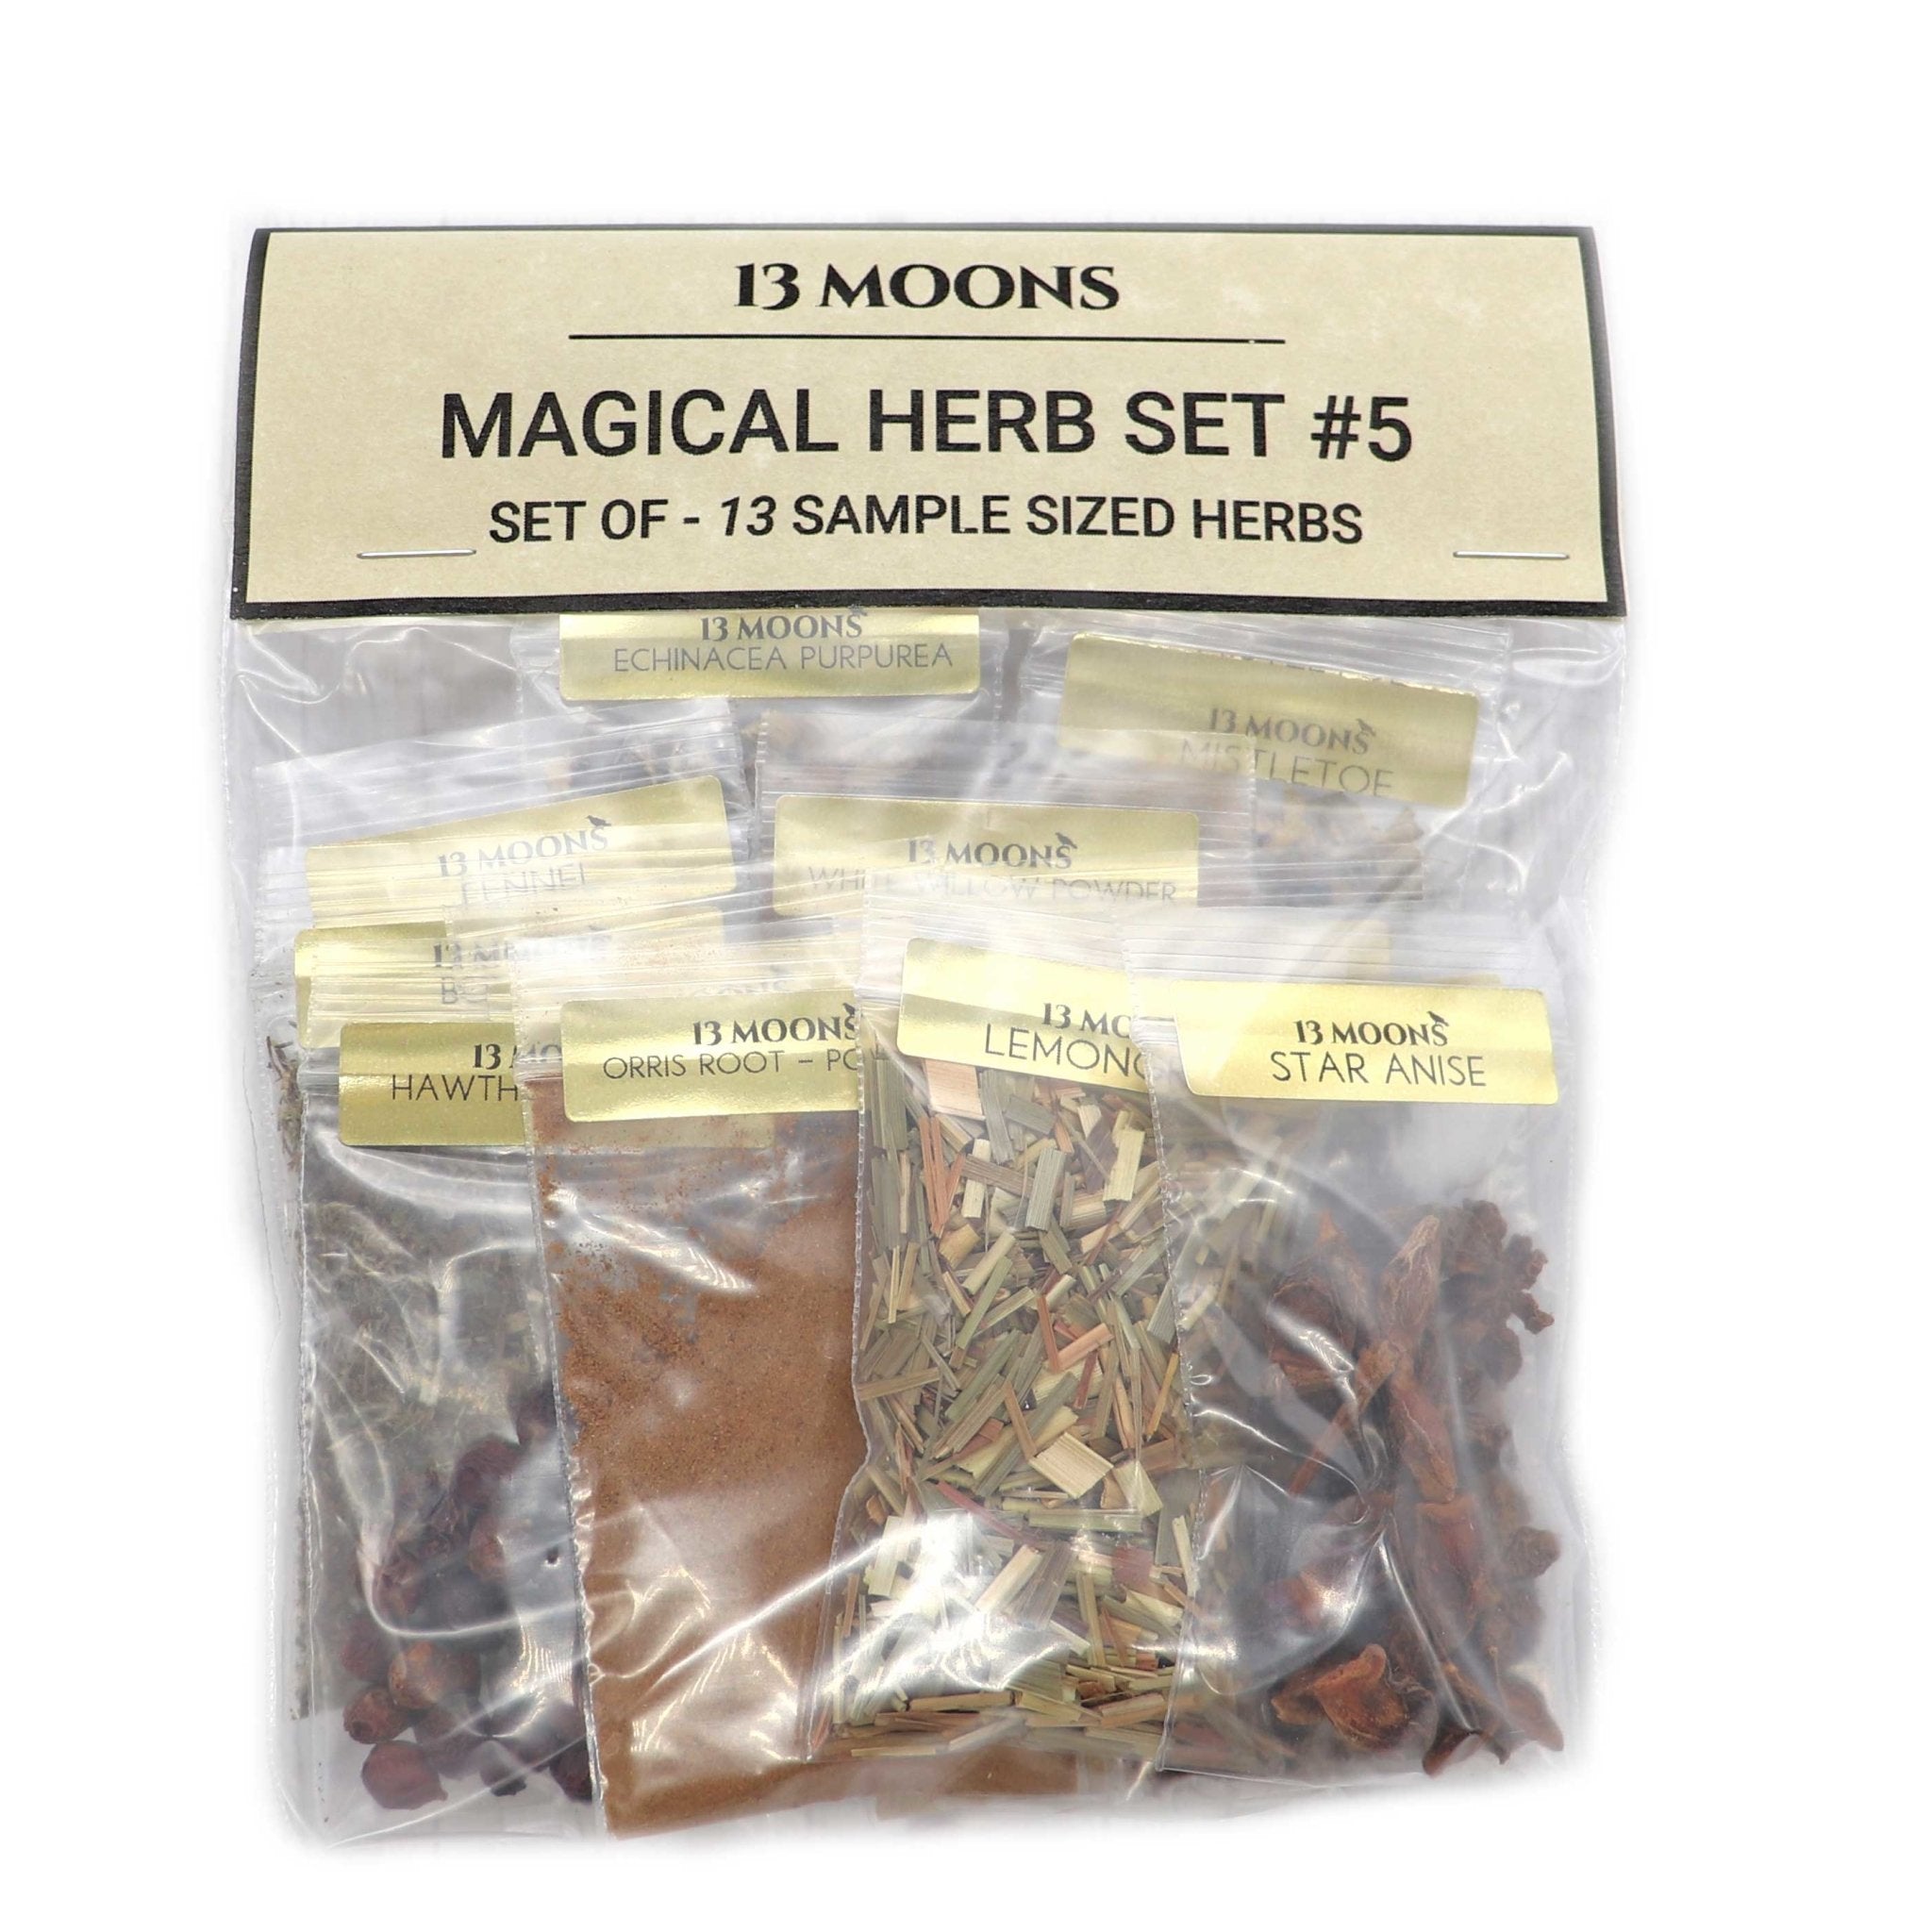 65 Magical Herb Set - 13 Moons